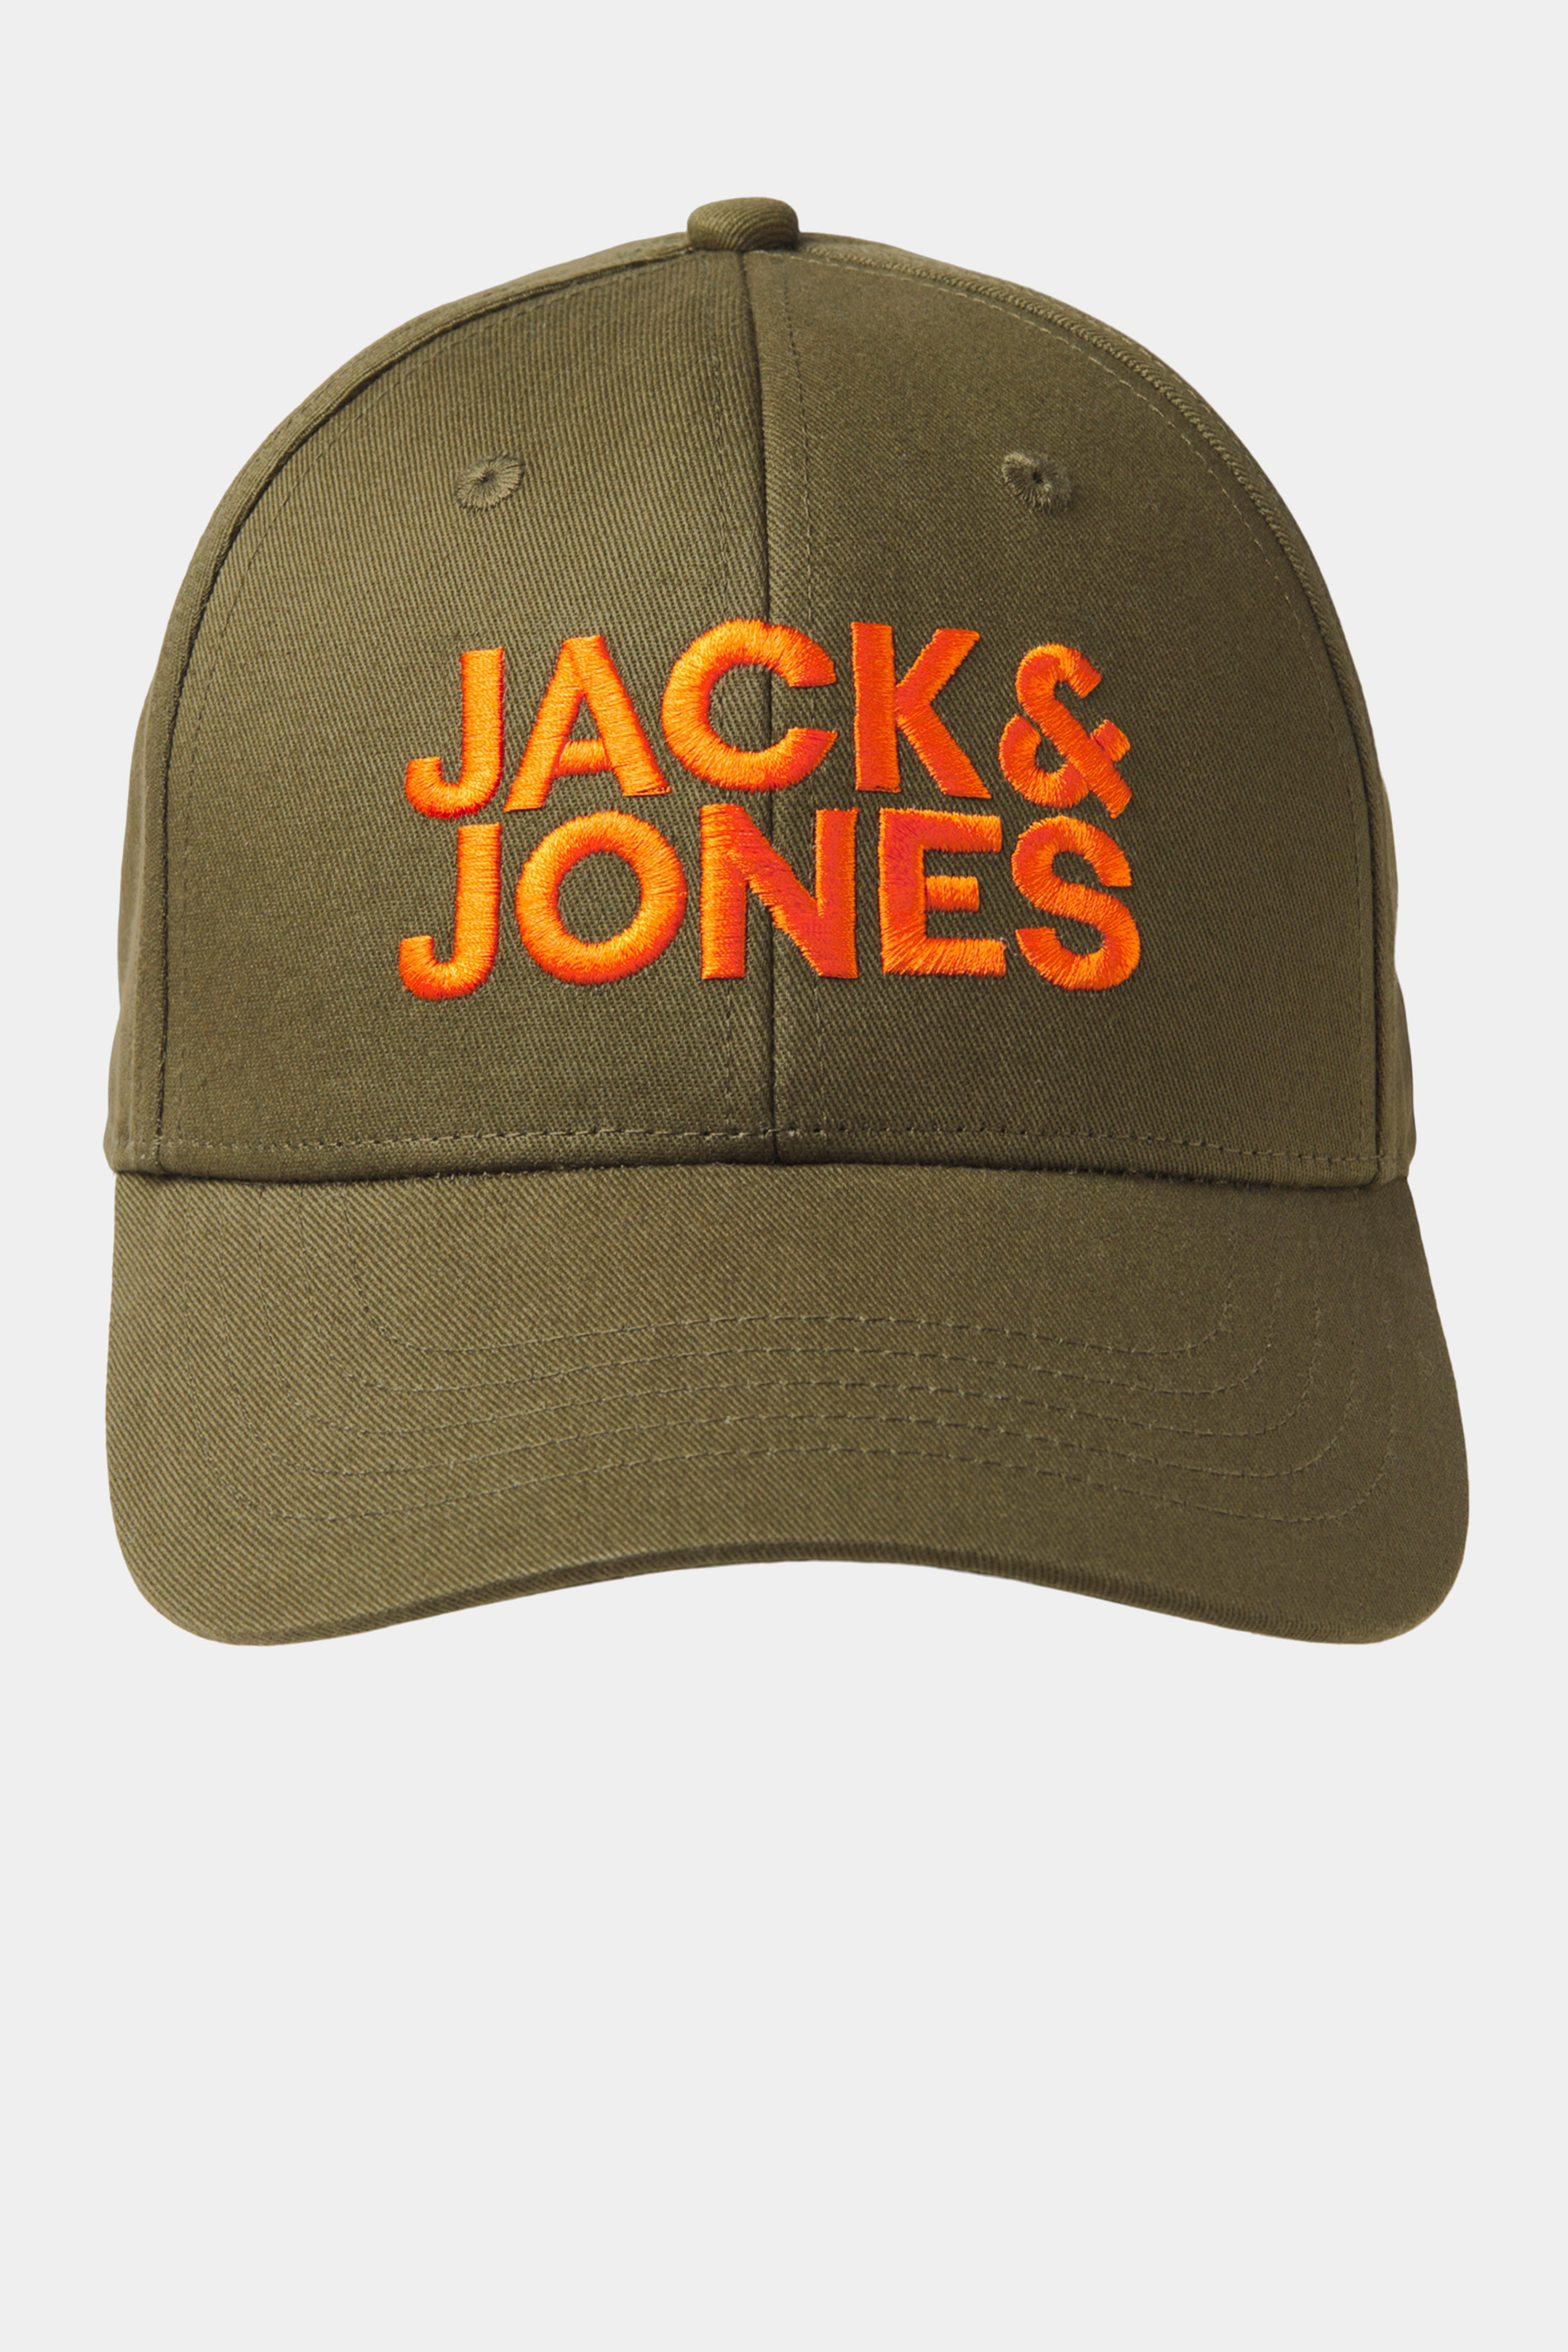 JACK & JONES Olive Green & Orange Baseball Cap | BadRhino 2